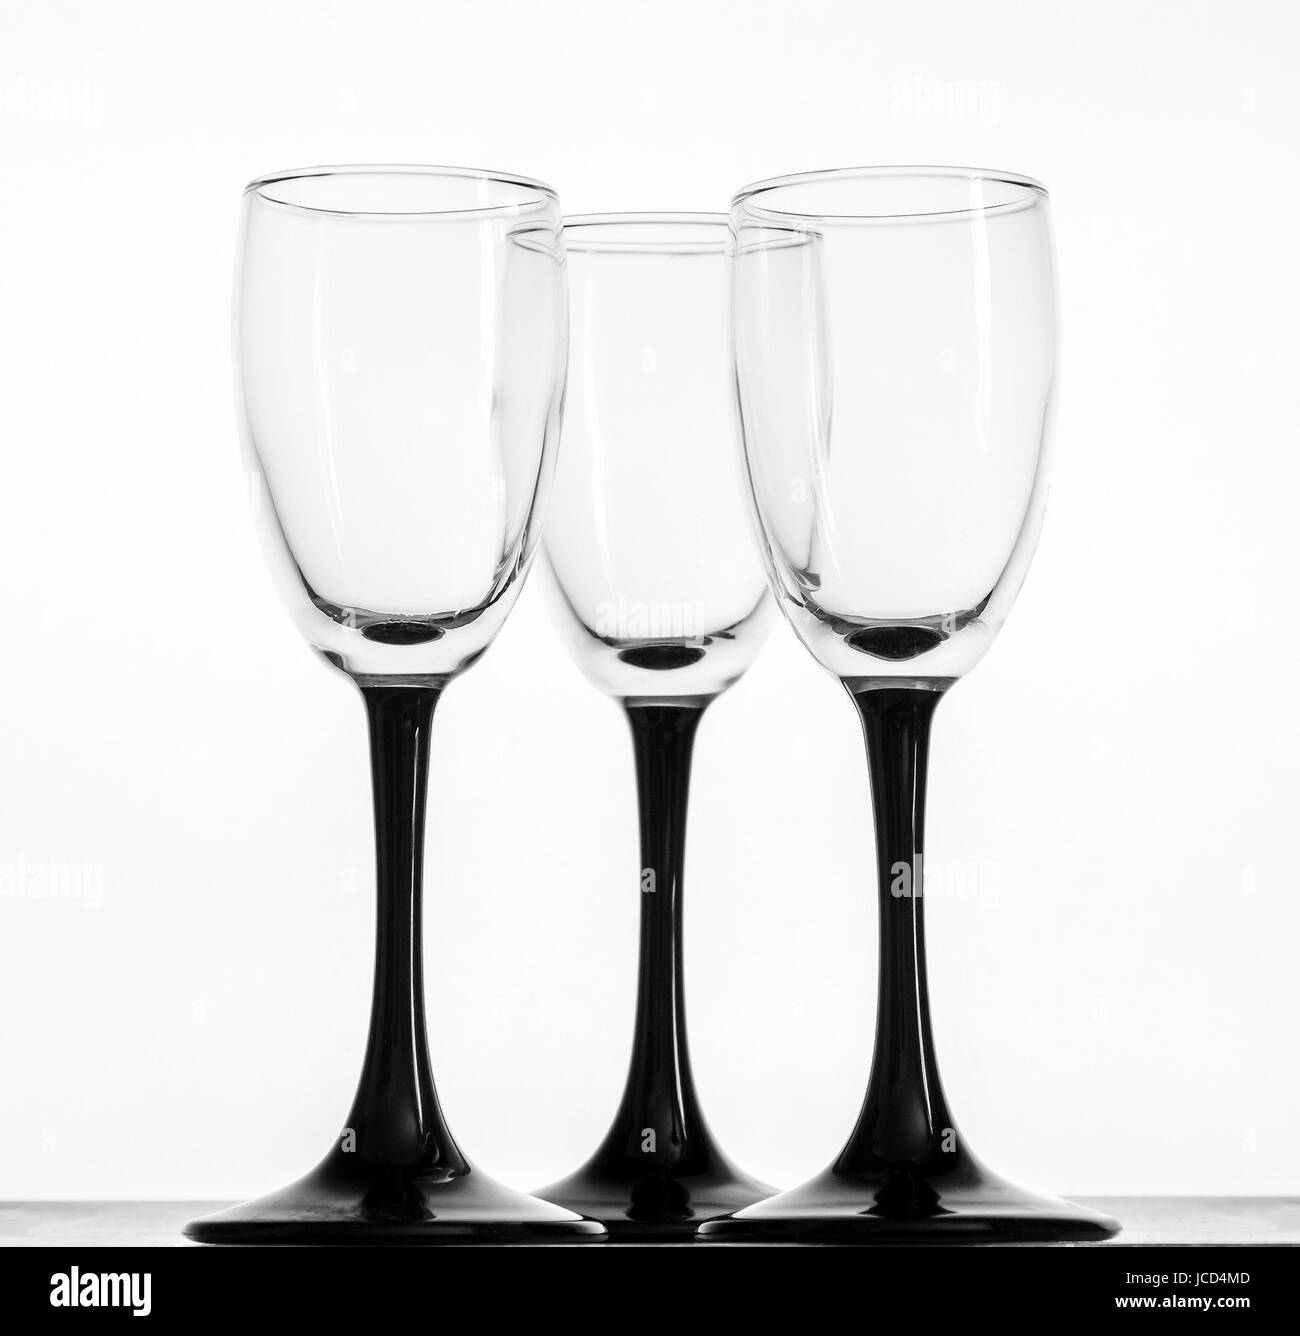 Three glasses of spirits on a white background Stock Photo